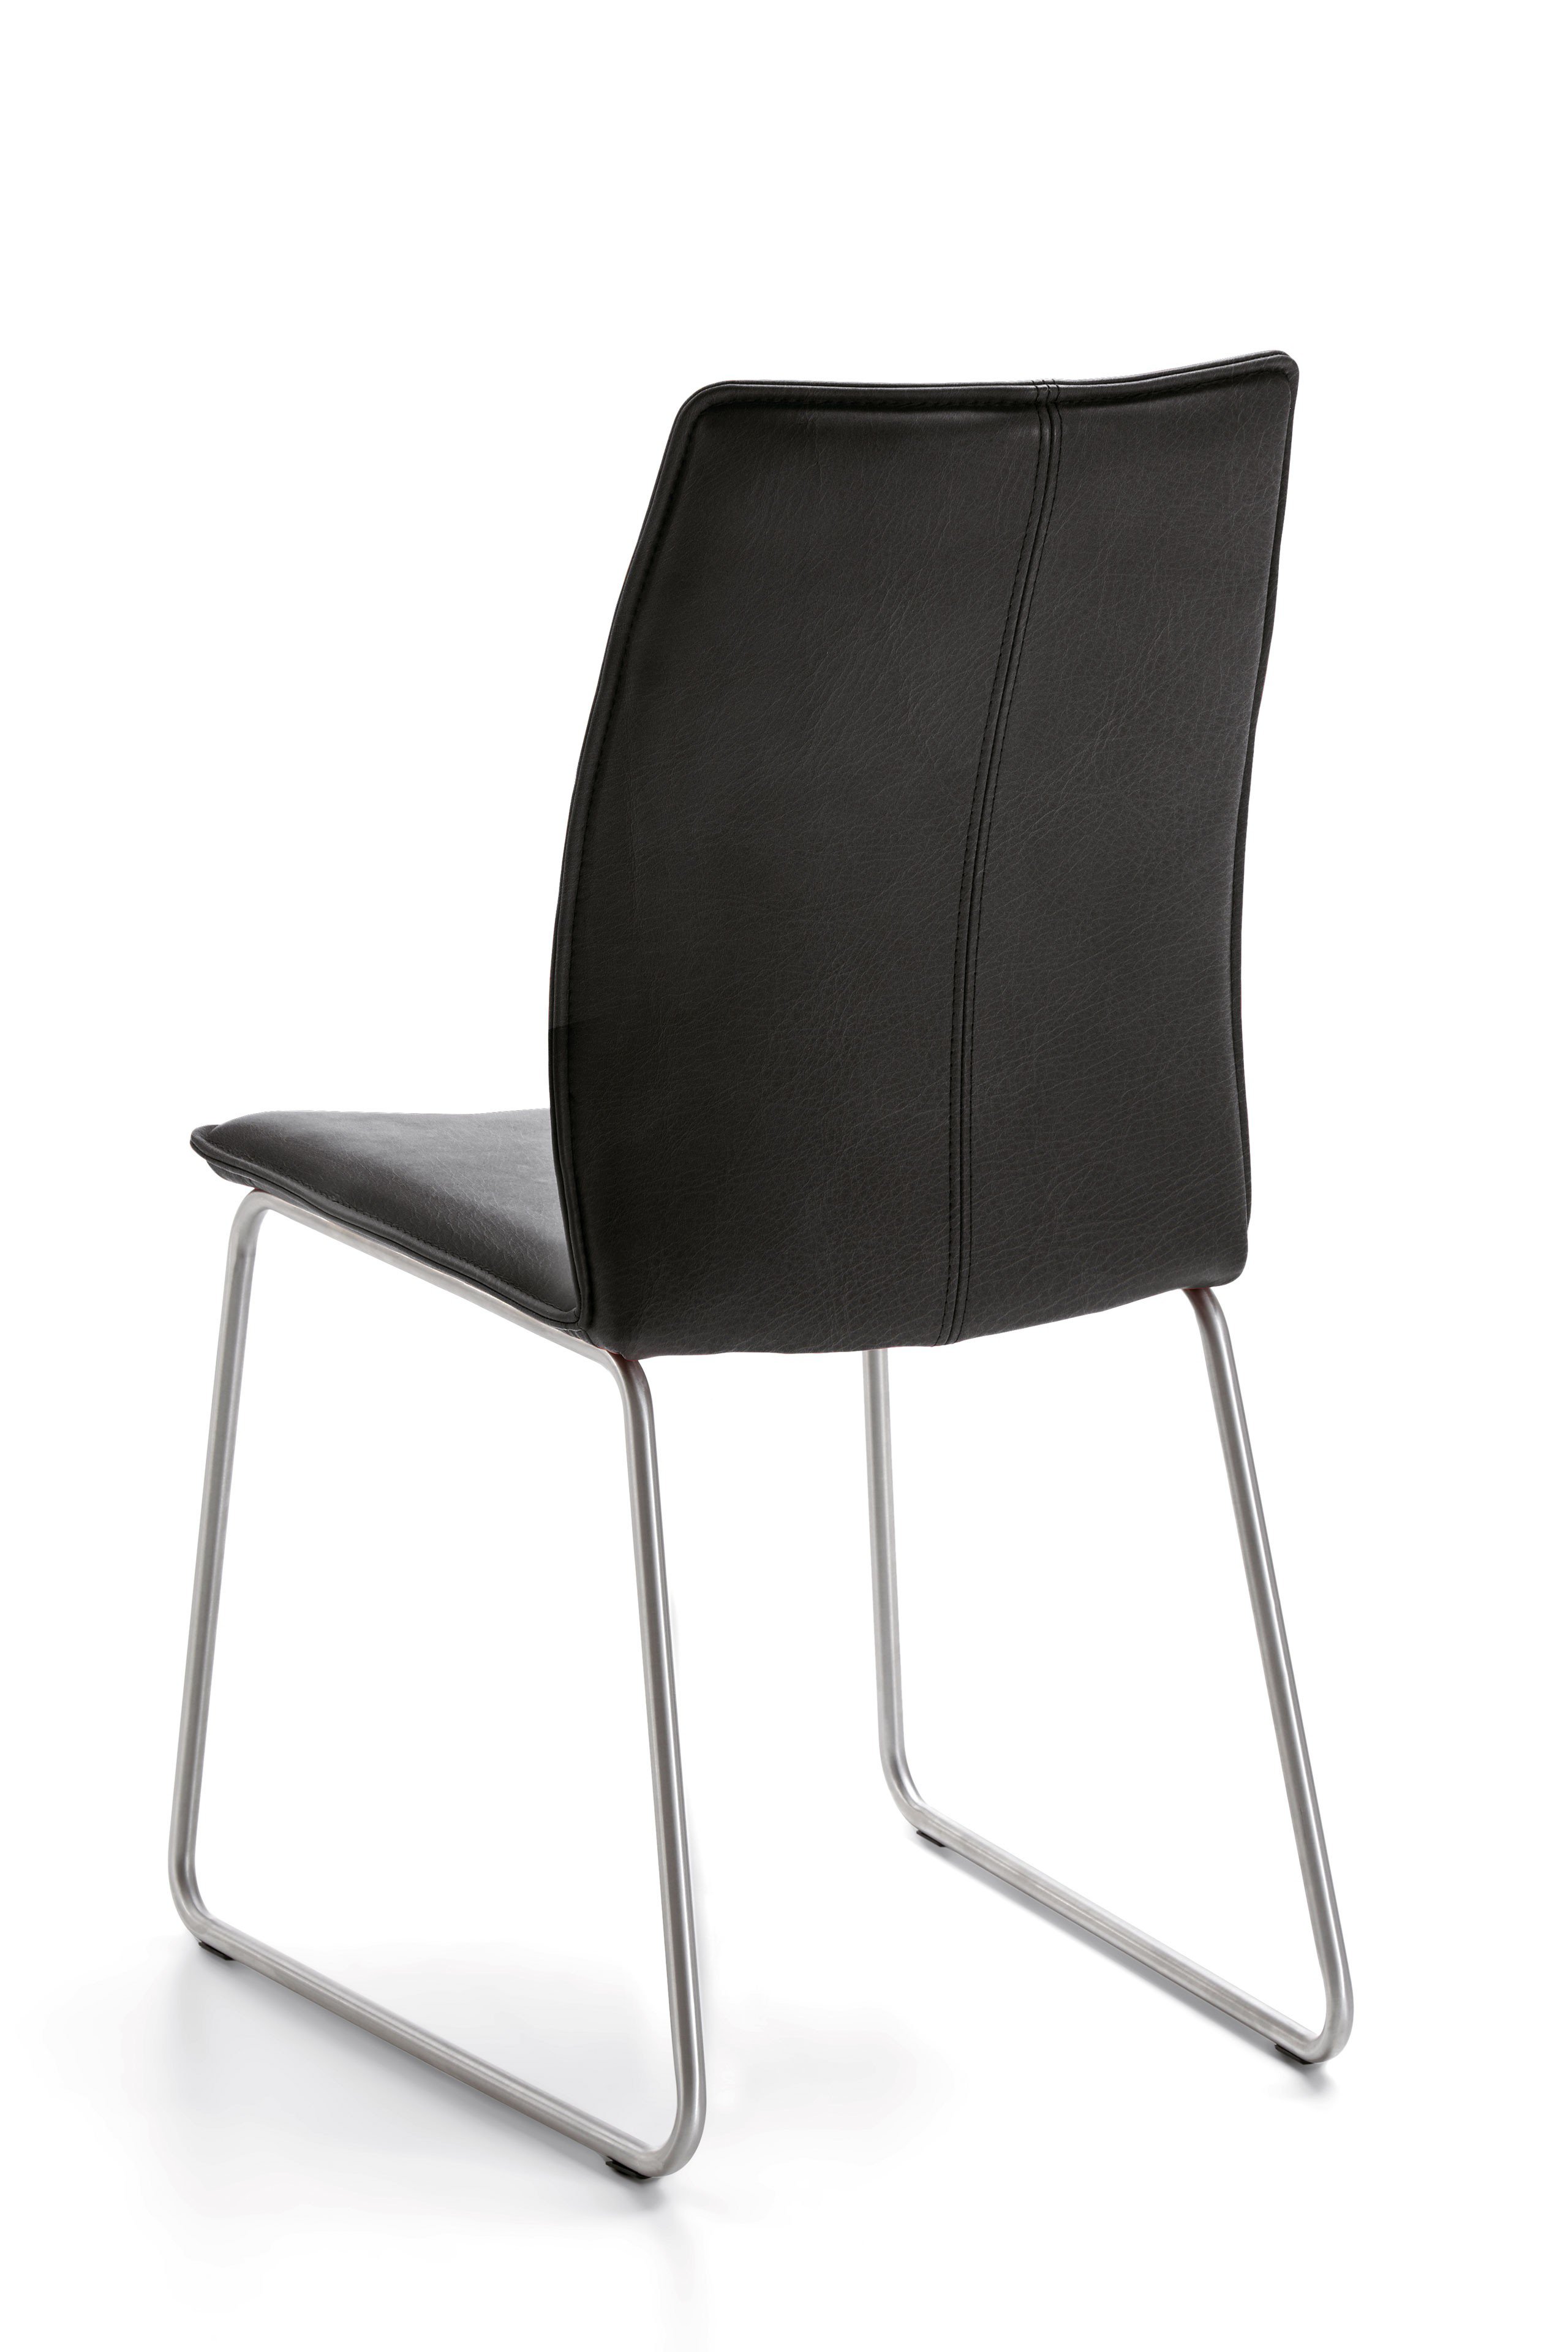 Niehoff Stuhl Capri Lederbezug in Carbon | Möbel Letz - Ihr Online-Shop